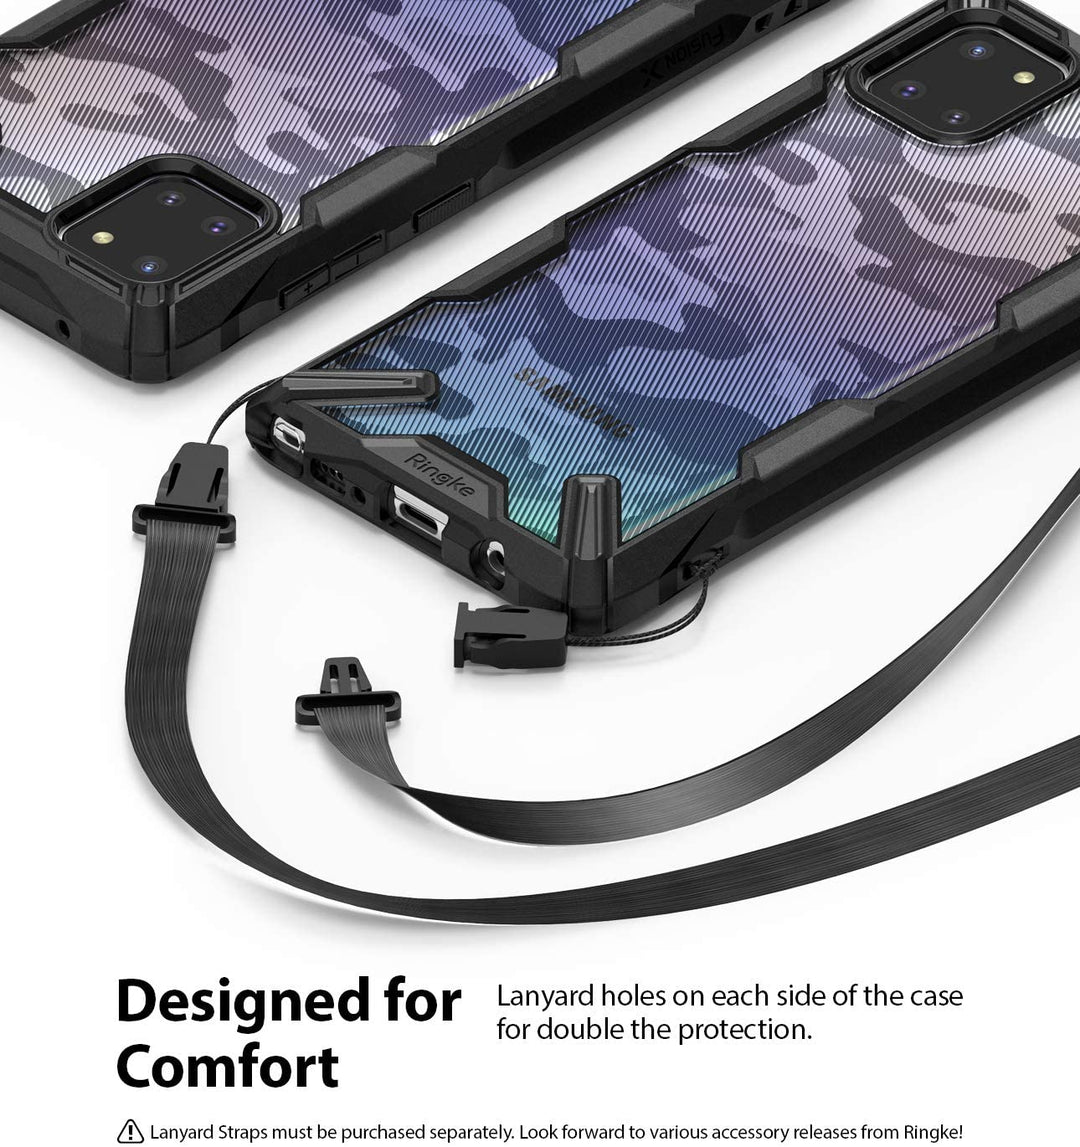 Ringke Fusion X Design Case Made for Galaxy Note 10 Lite (2020) - Camo Black - 3alababak